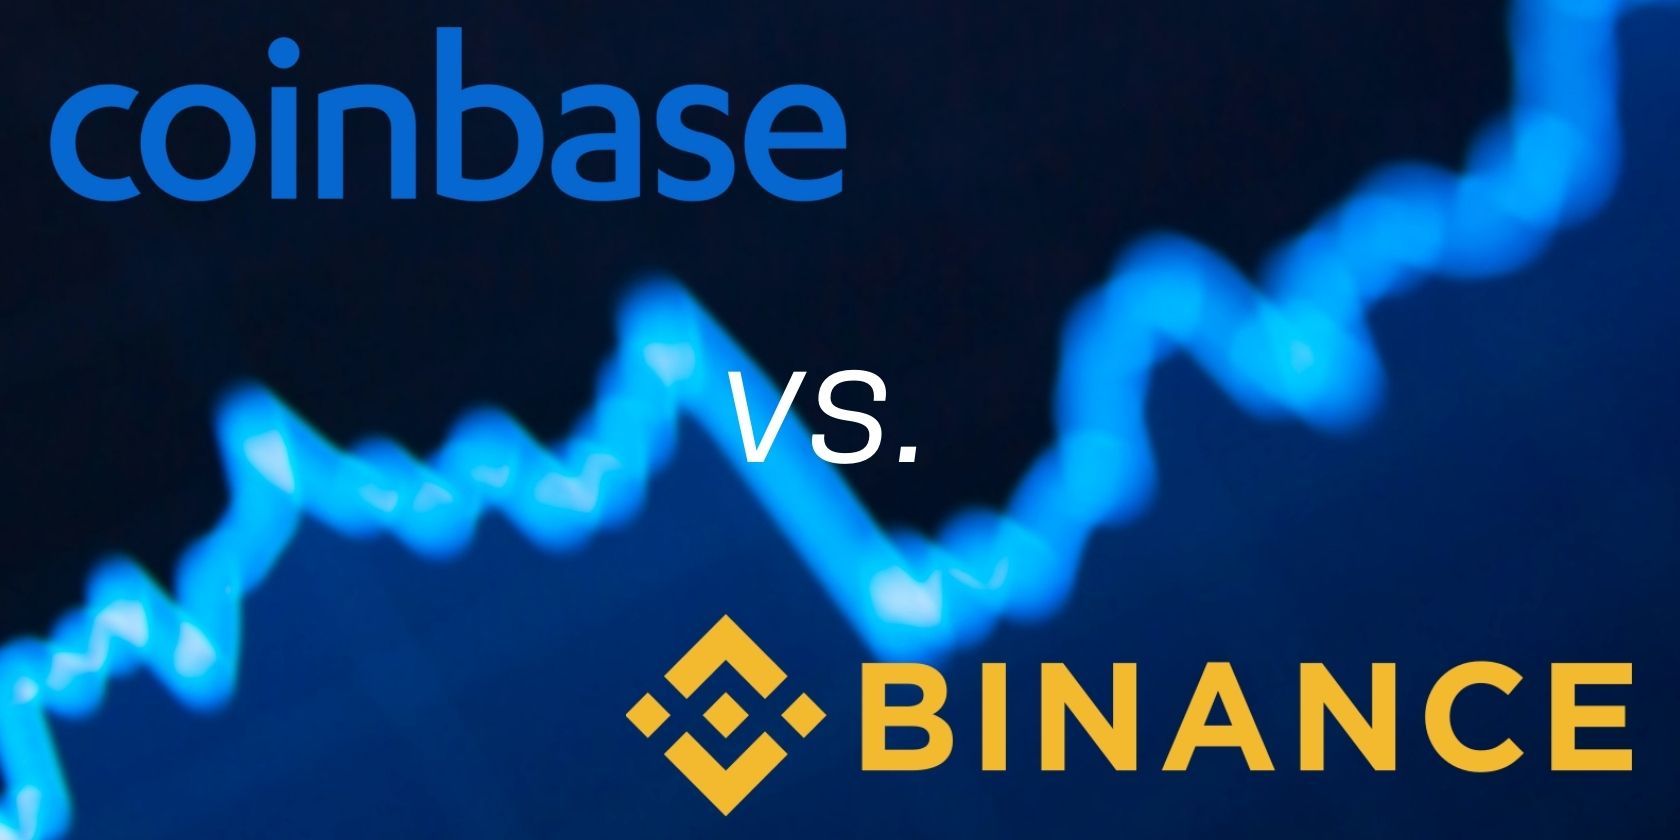 coinbase vs binance logo graphic